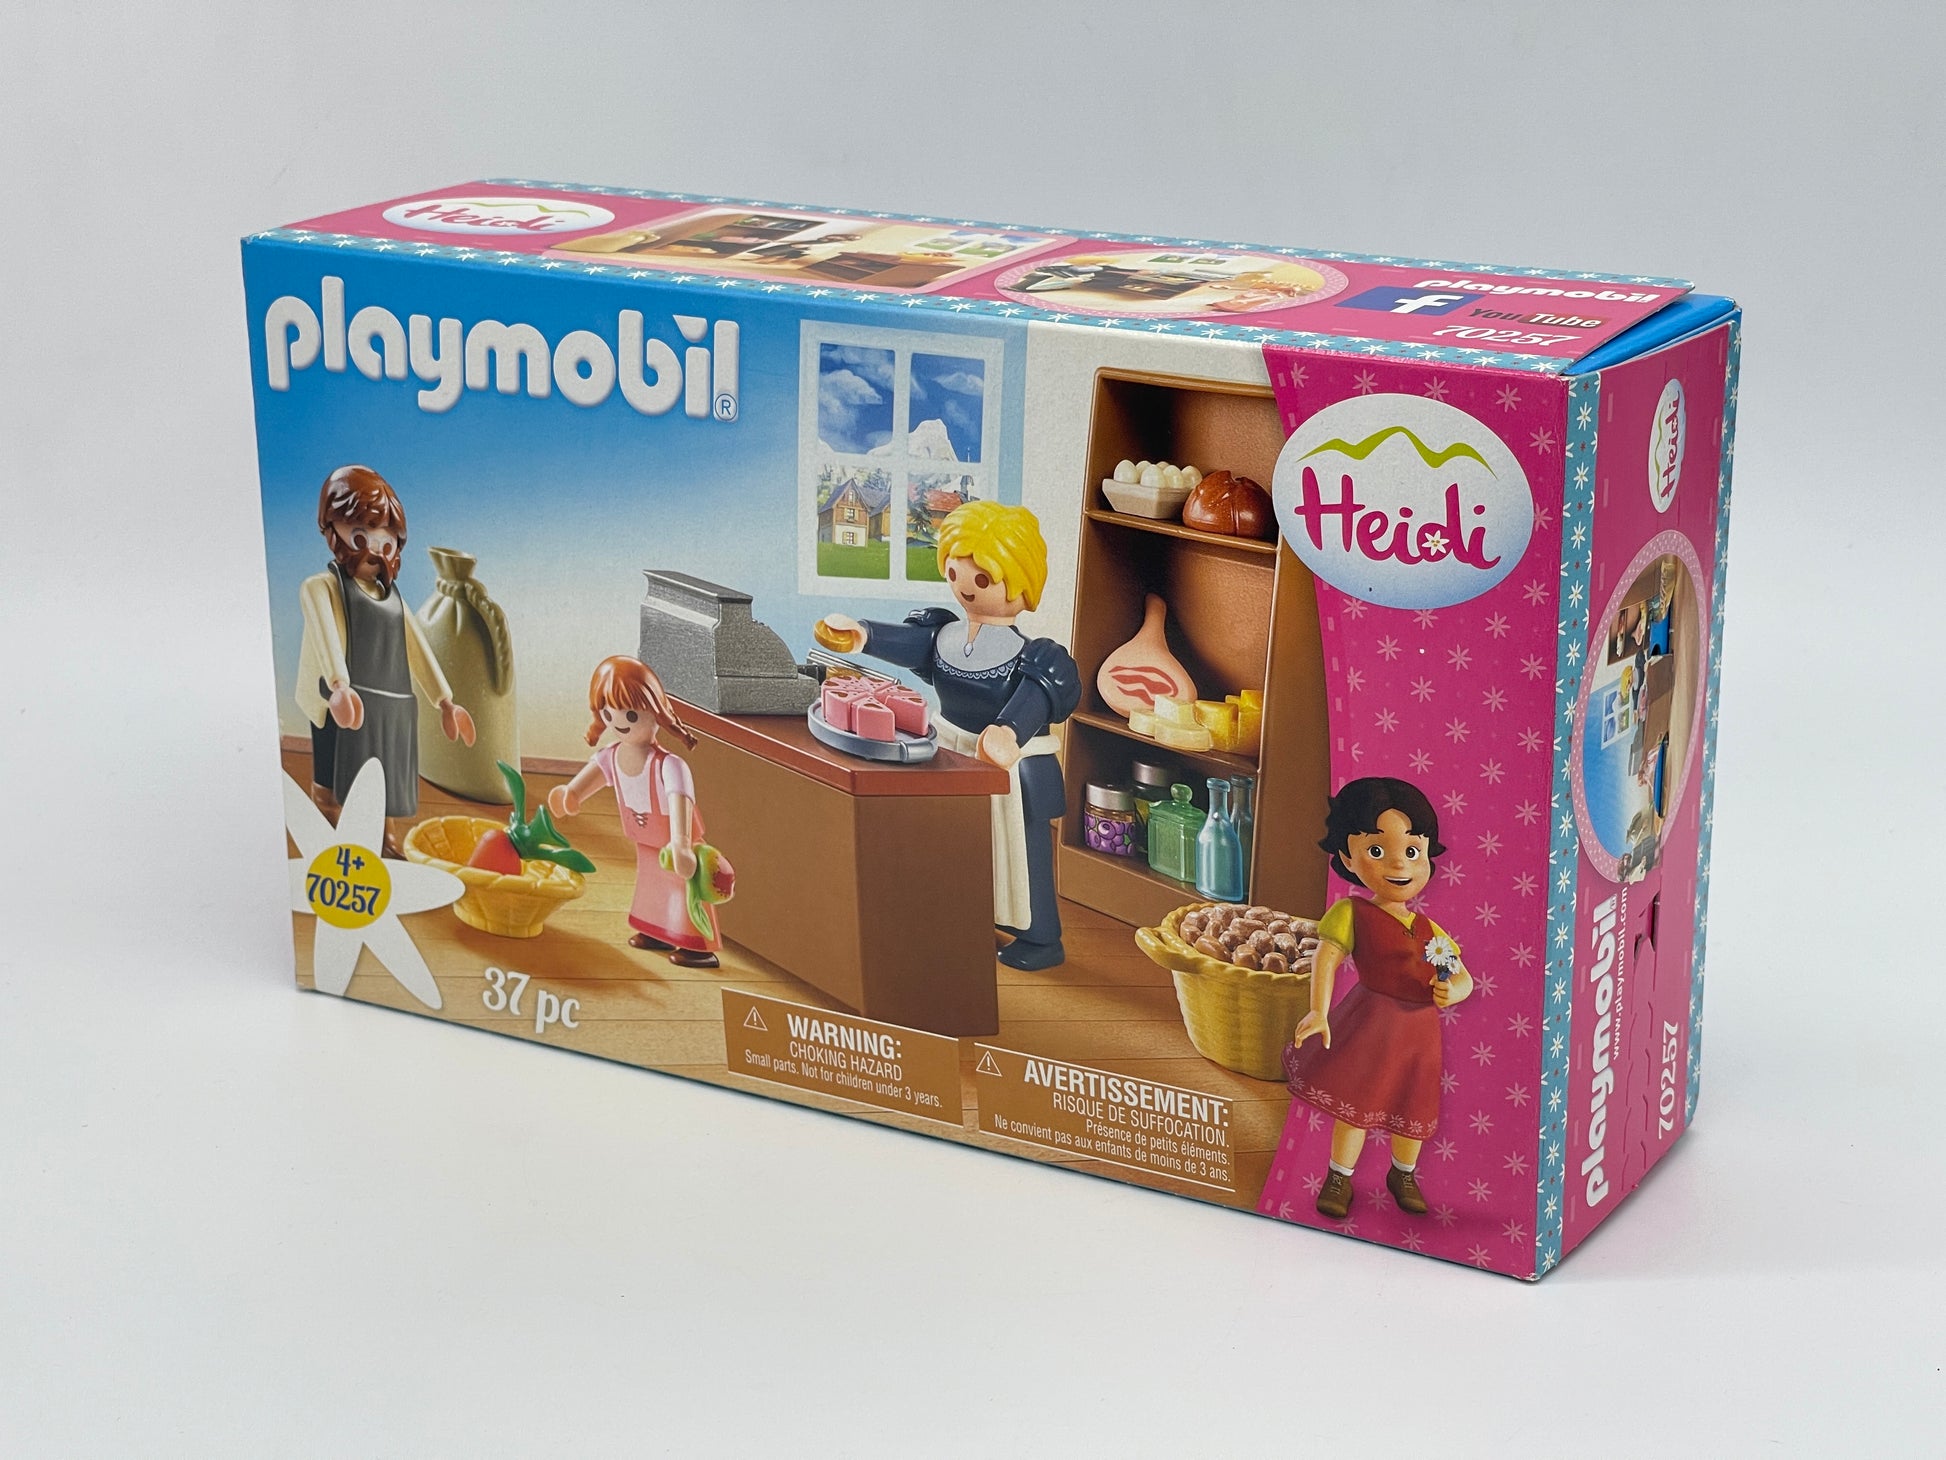 Playmobil PLAYMOBIL Heidi 70257 Épicerie de la famille Keller